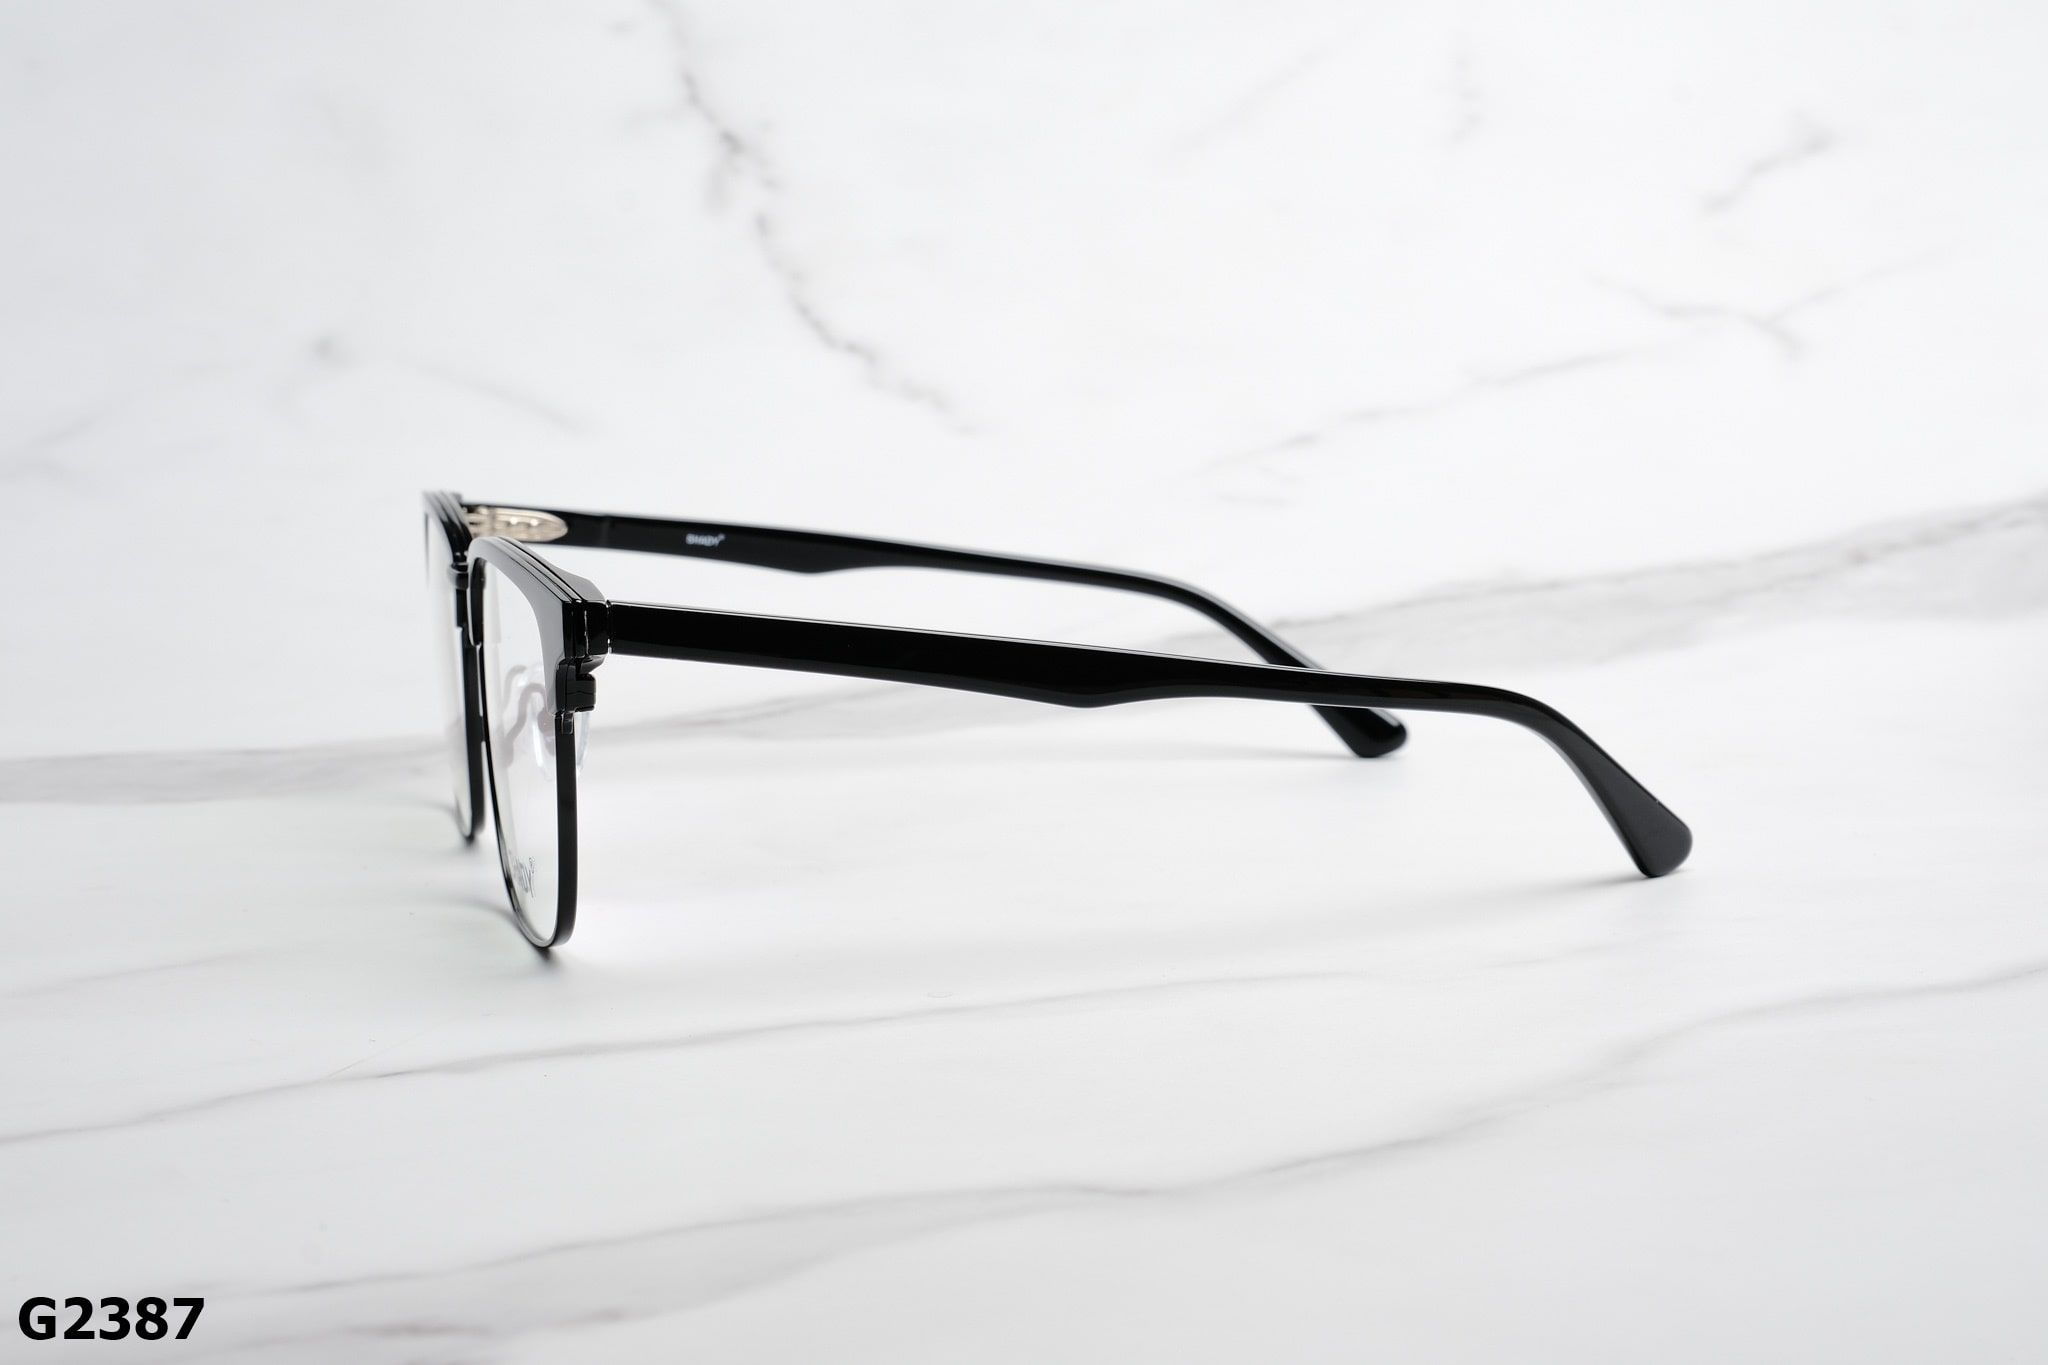  SHADY Eyewear - Glasses - G2387 